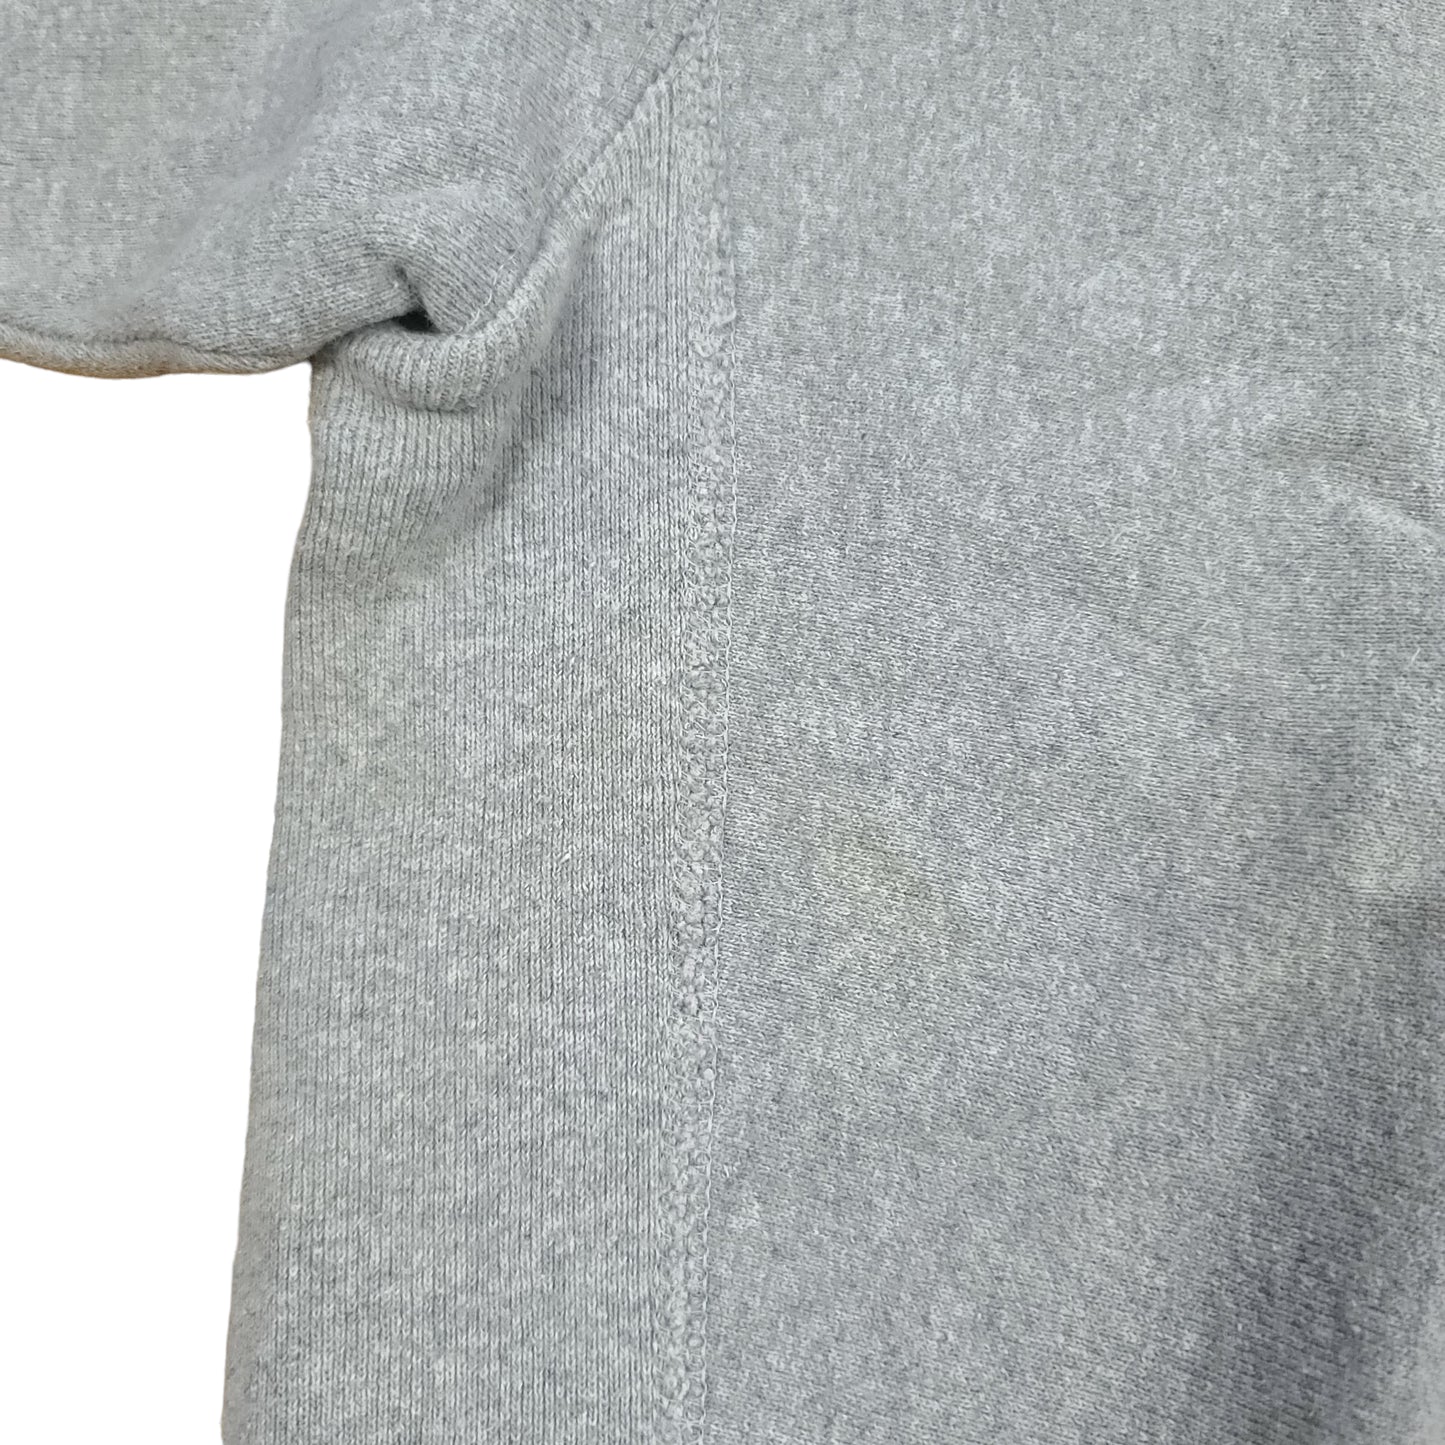 Vintage Gray Champion Reverse Weave Sweatshirt (M)